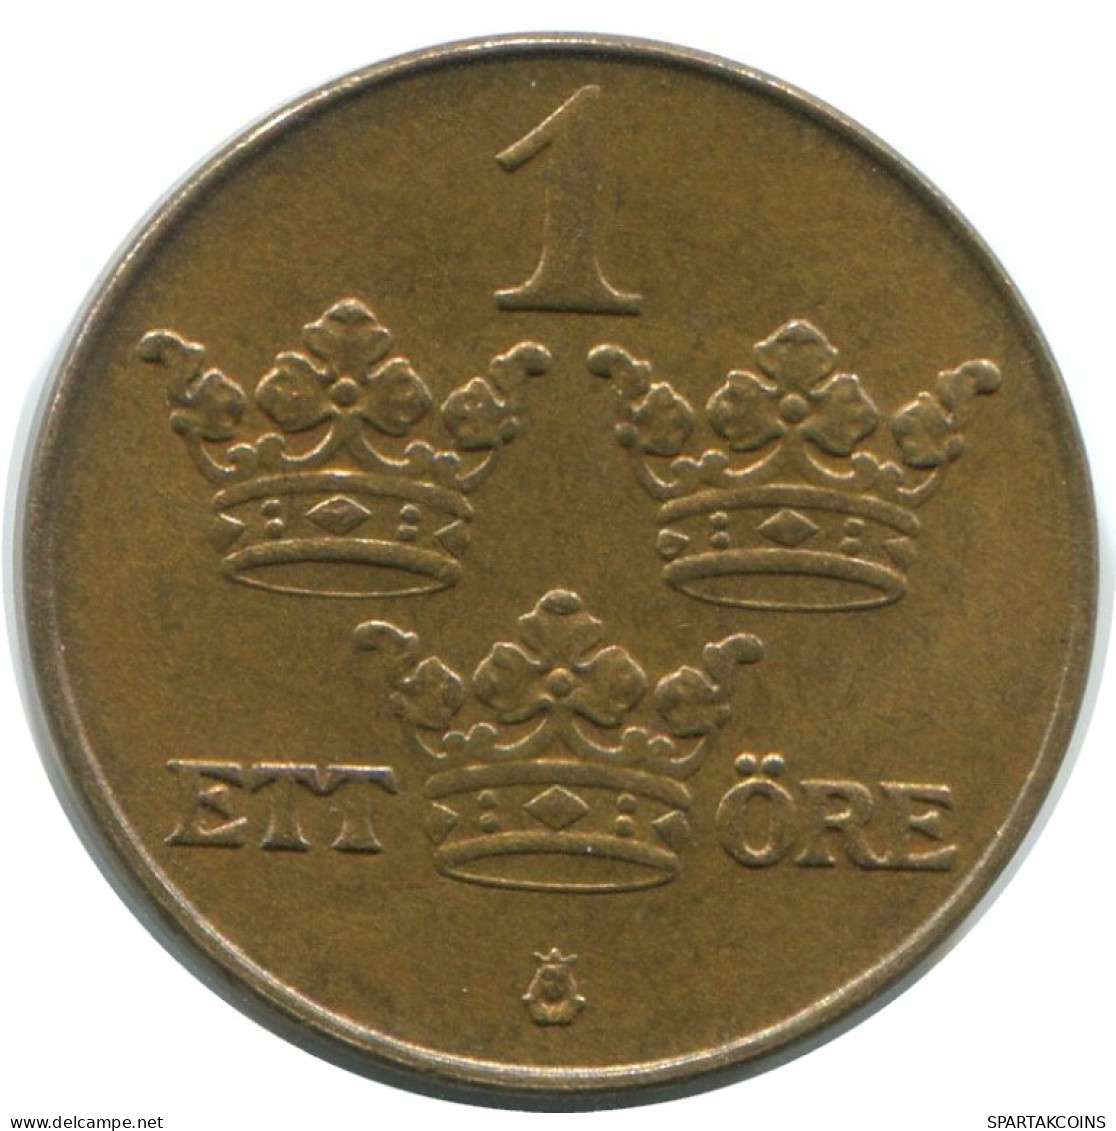 1 ORE 1940 SWEDEN Coin #AD365.2.U.A